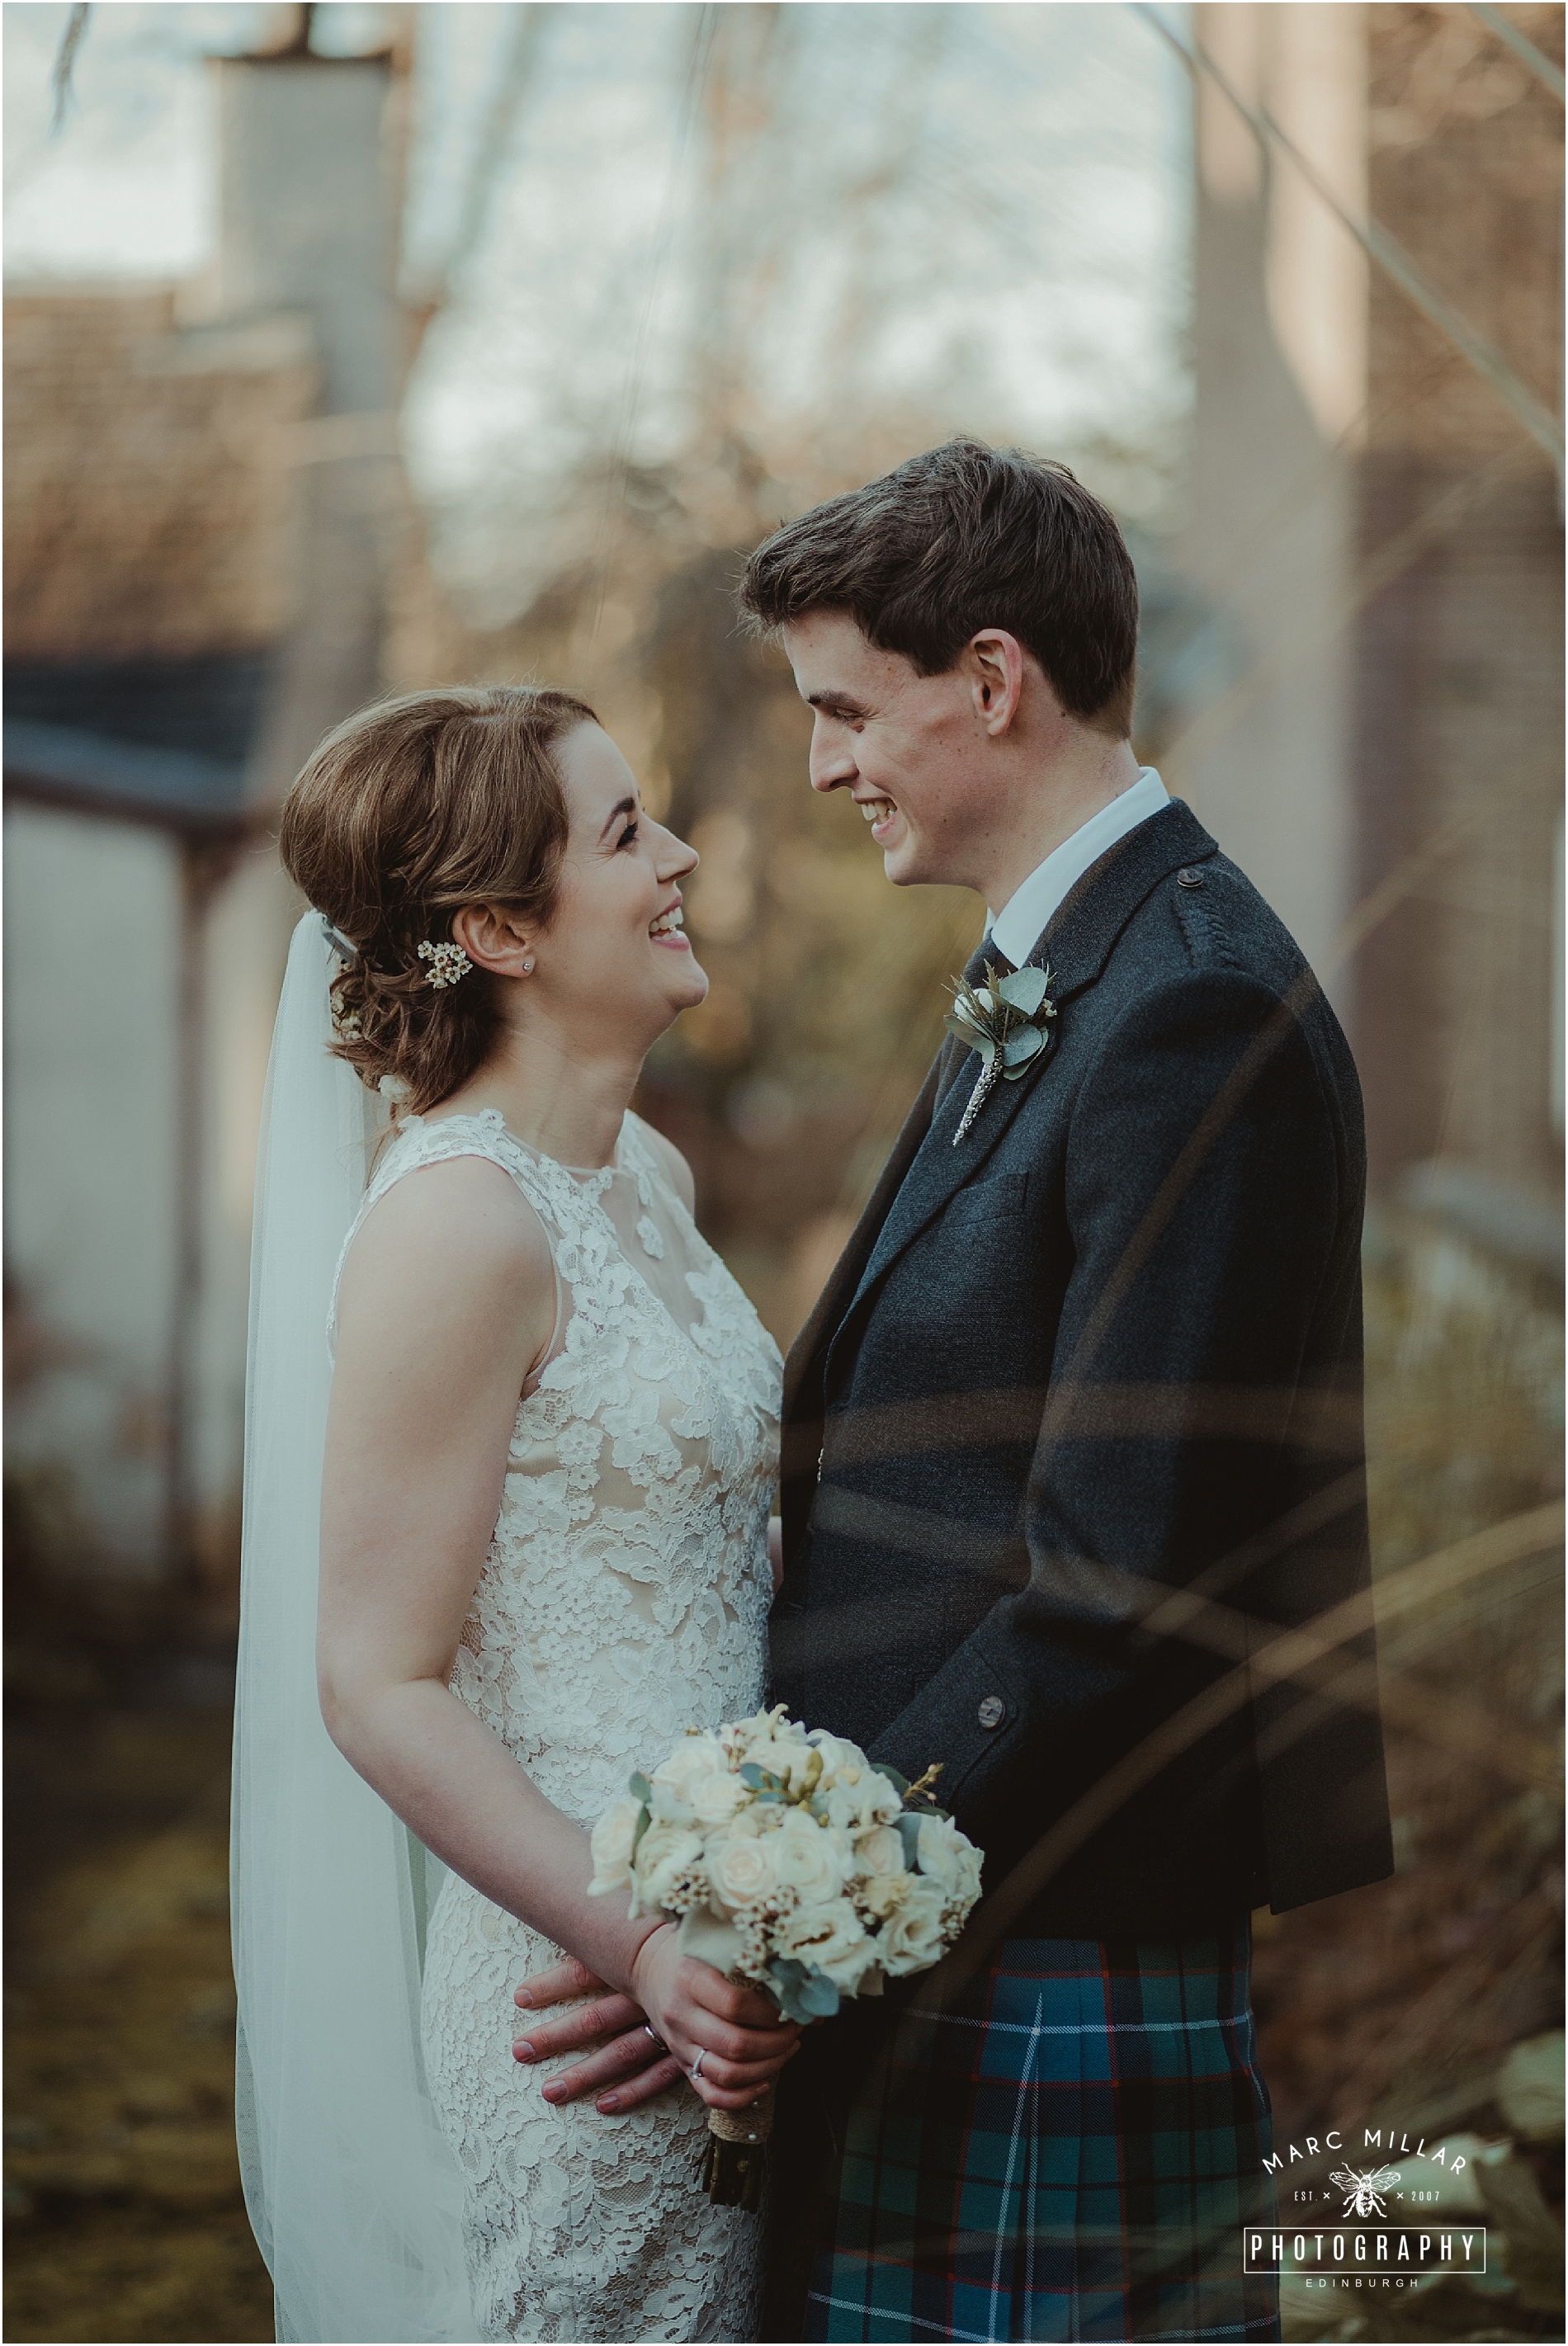  One Devonshire Gardens Wedding Shoot by Marc Millar Photography 